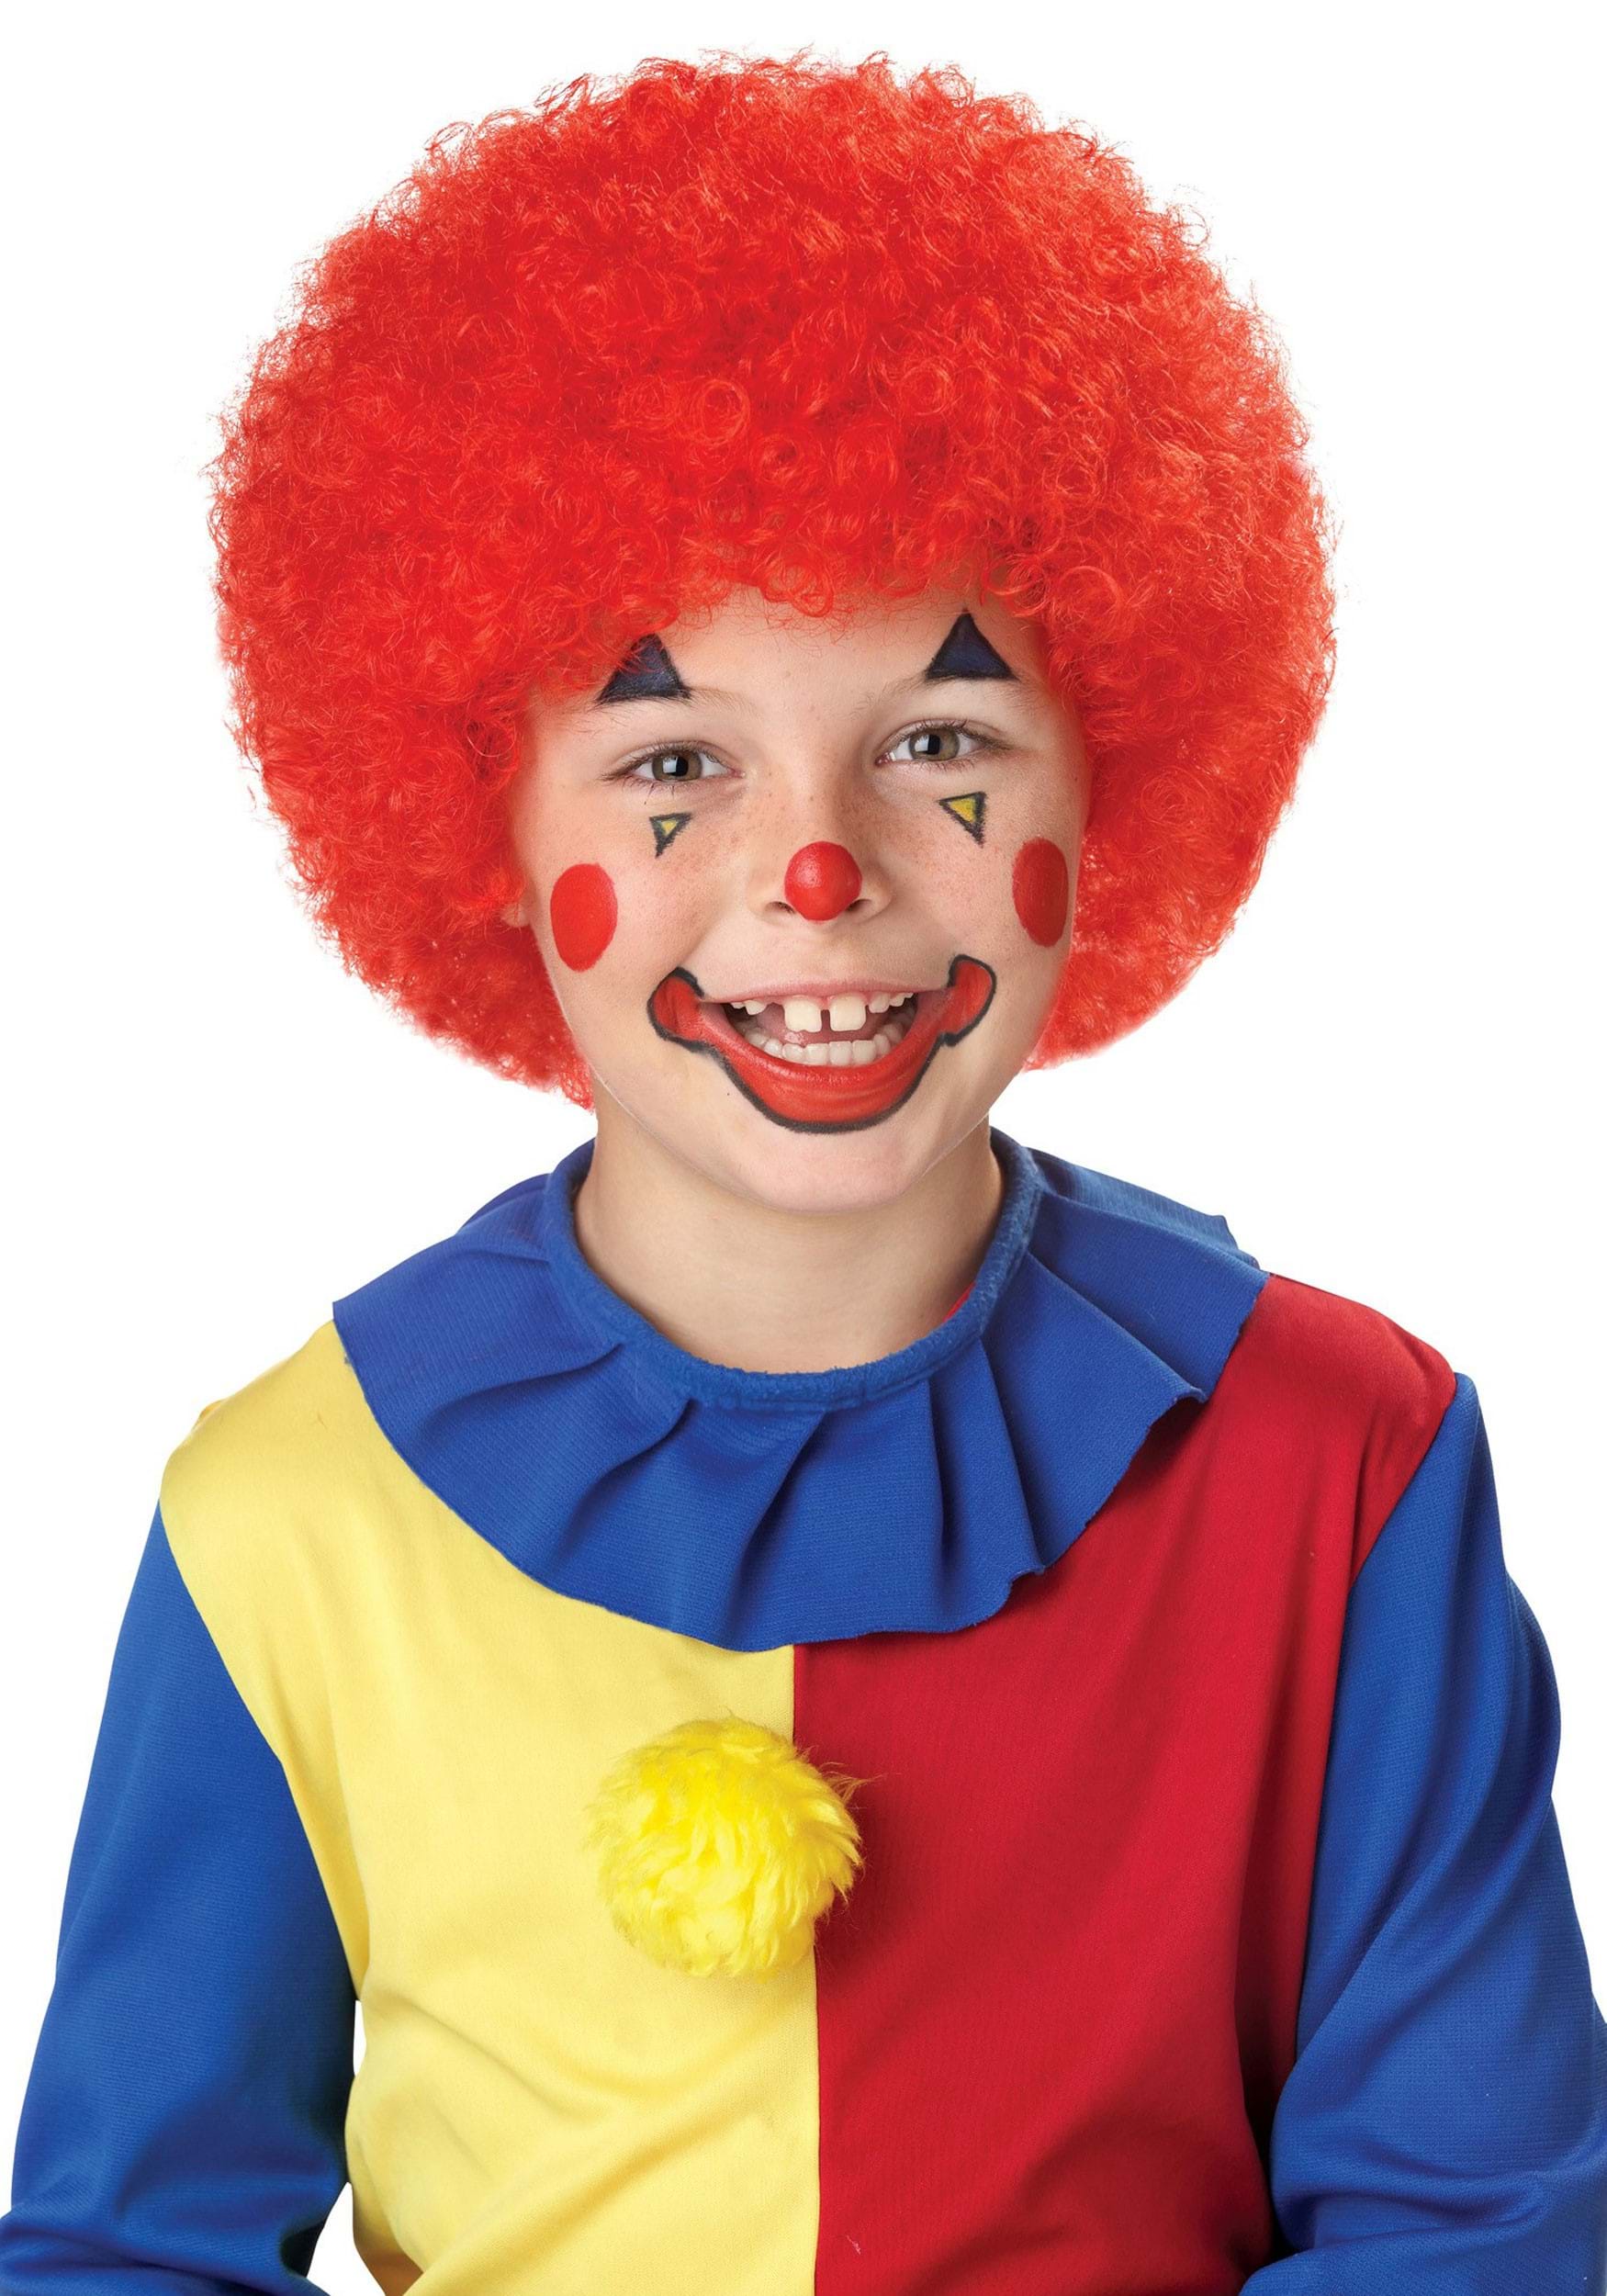 Kid’s Red Clown Wig